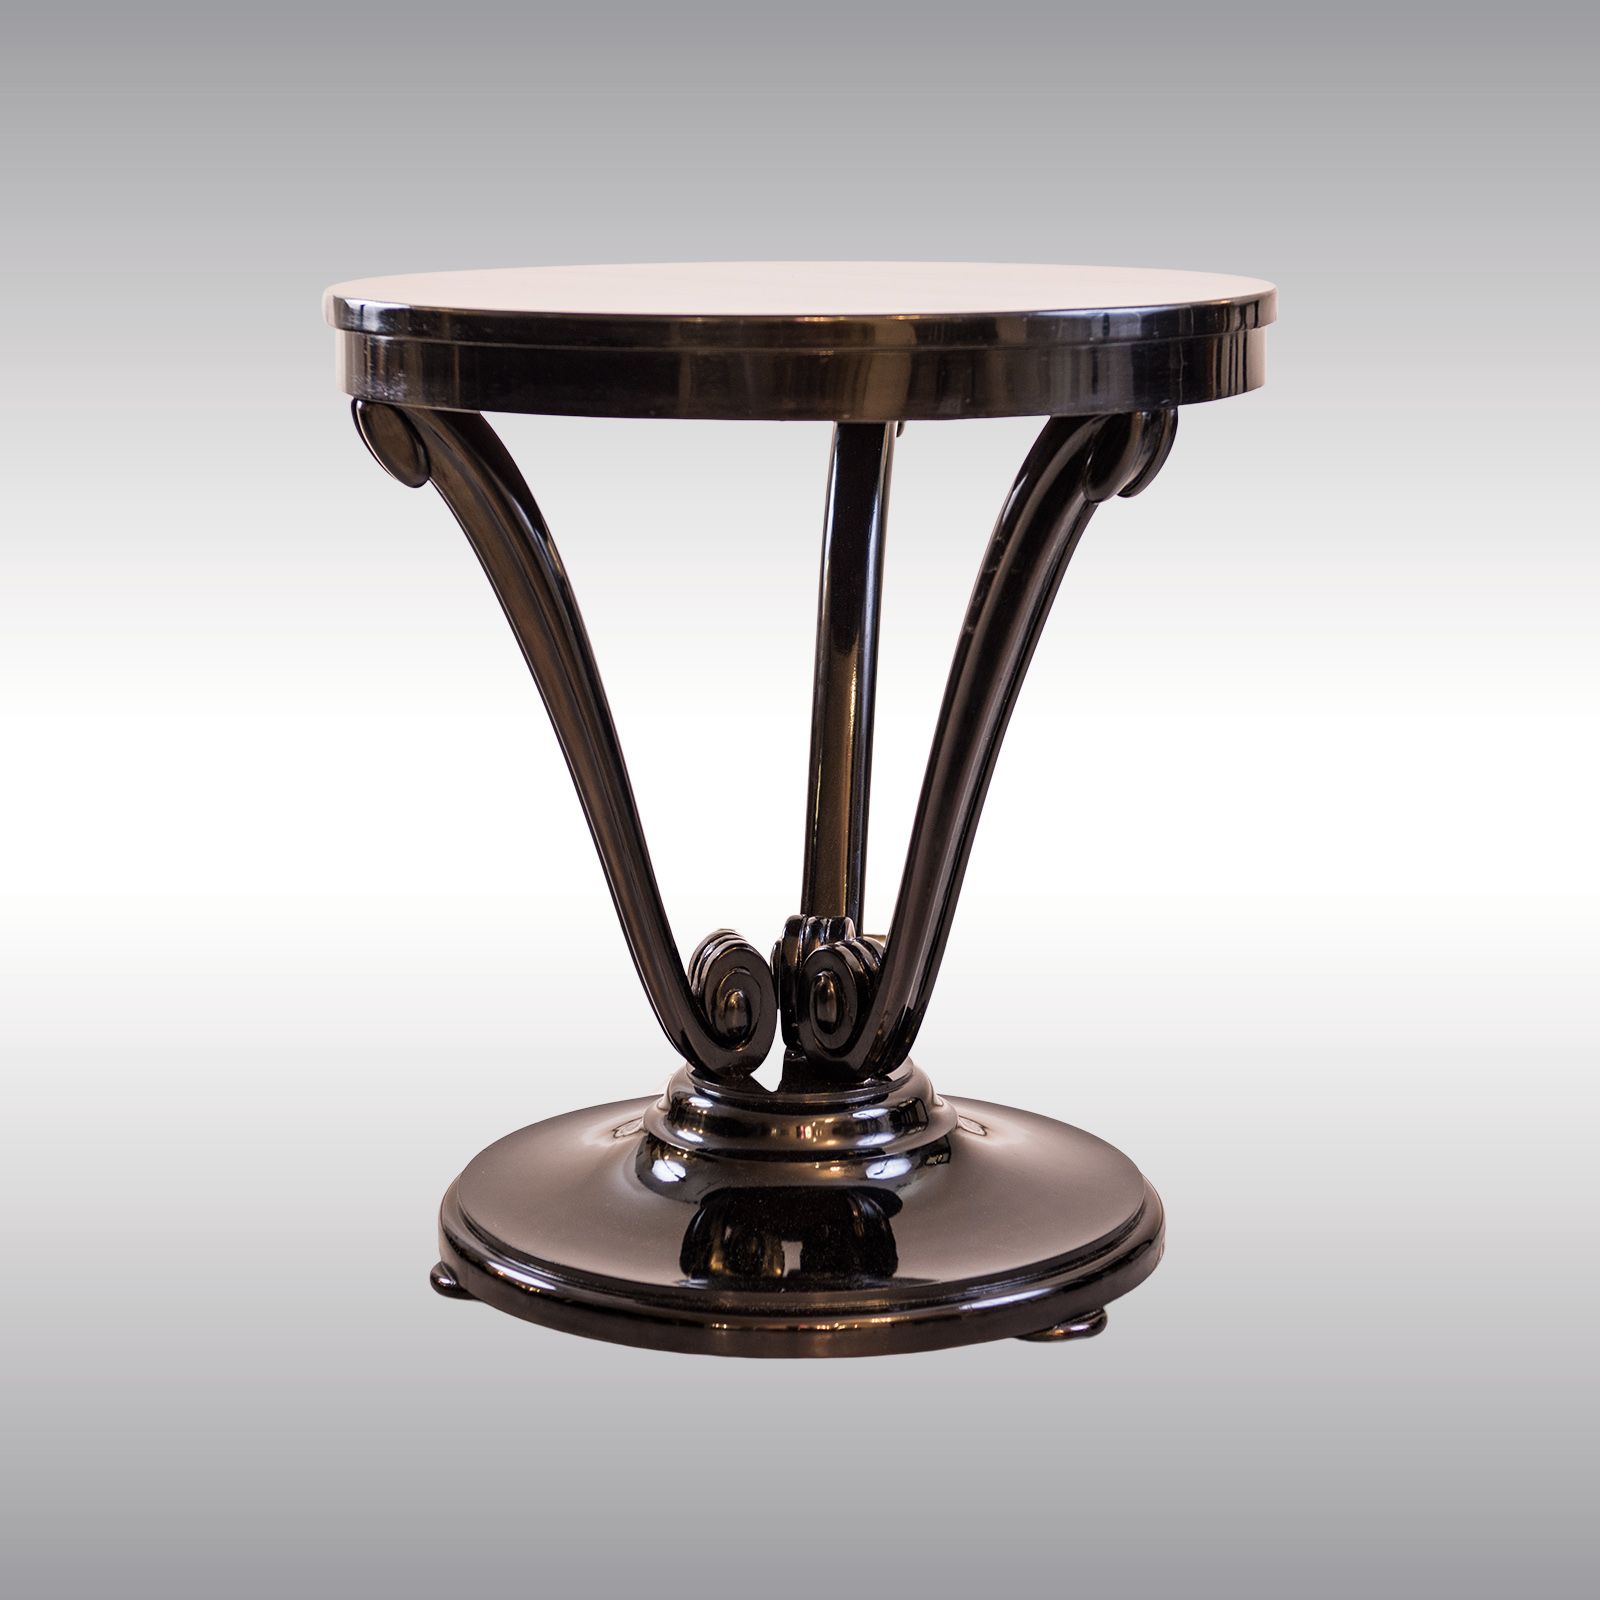 WOKA LAMPS VIENNA - OrderNr.: 50110|Coffe-Table attributed to Otto Prutscher and Thonet - Design: Otto Prutscher